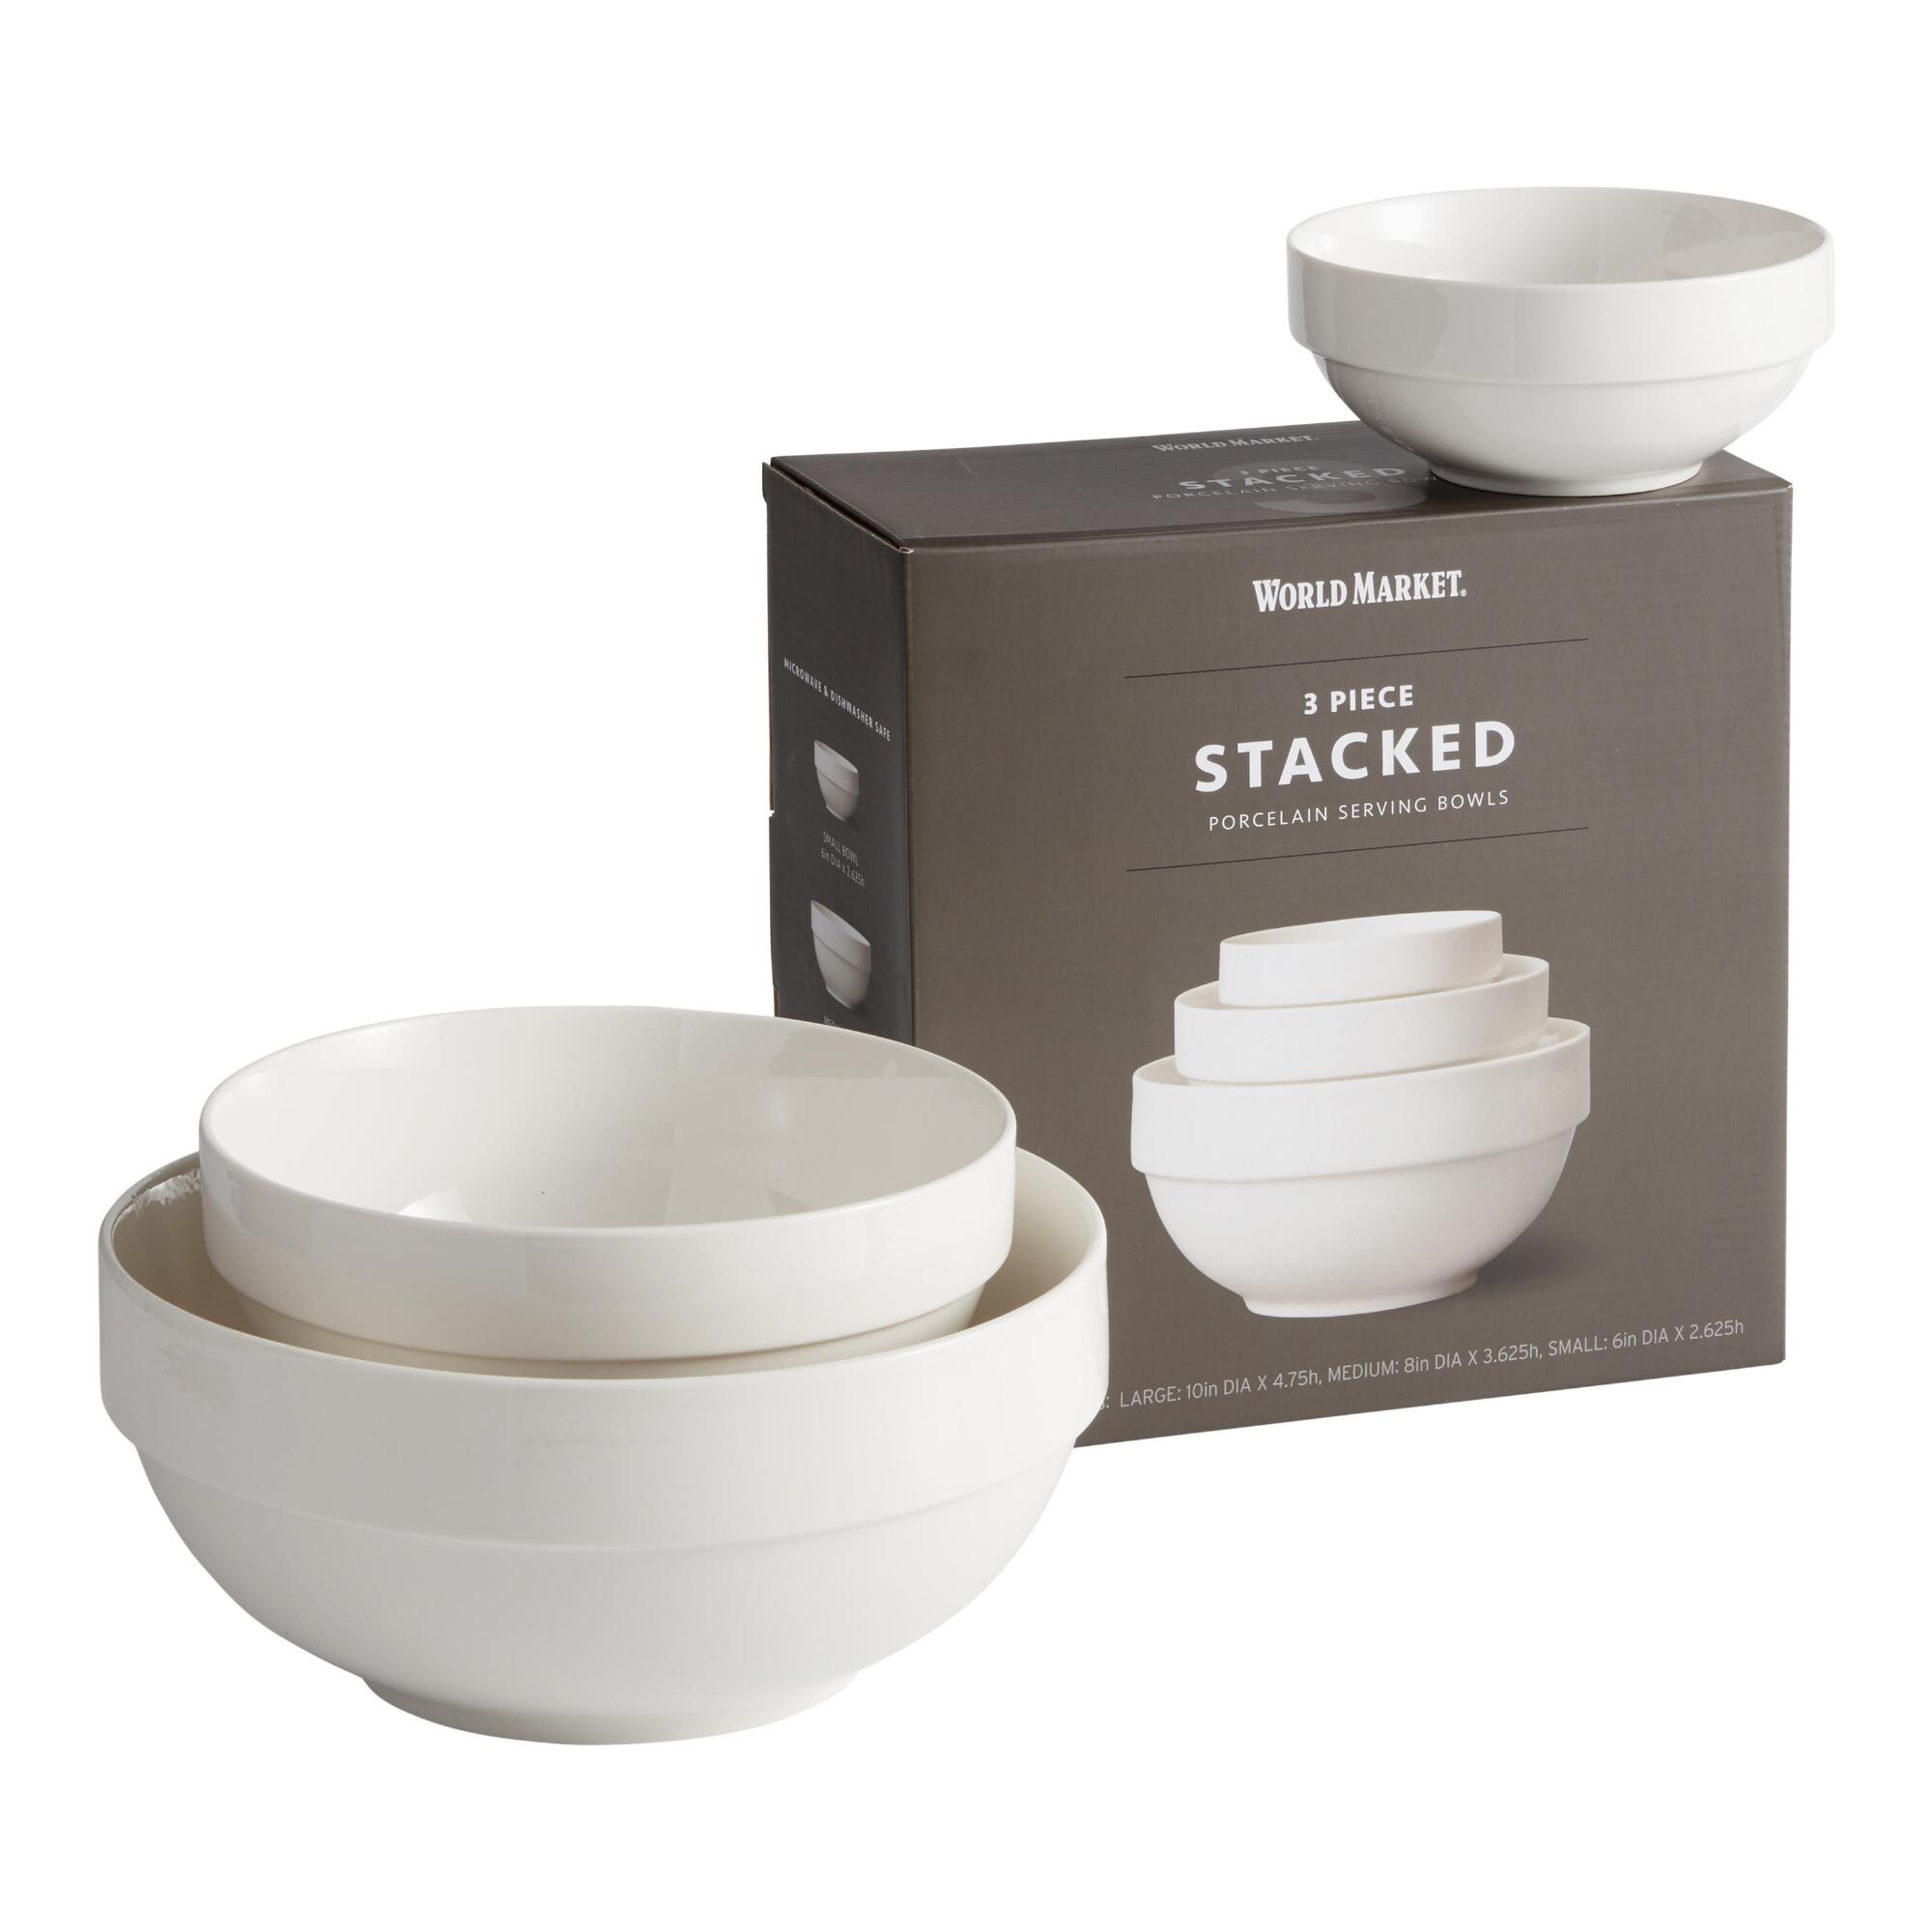 Natural White Porcelain Stacked 3 Piece Serving Bowl Set - Ceramic by World Market